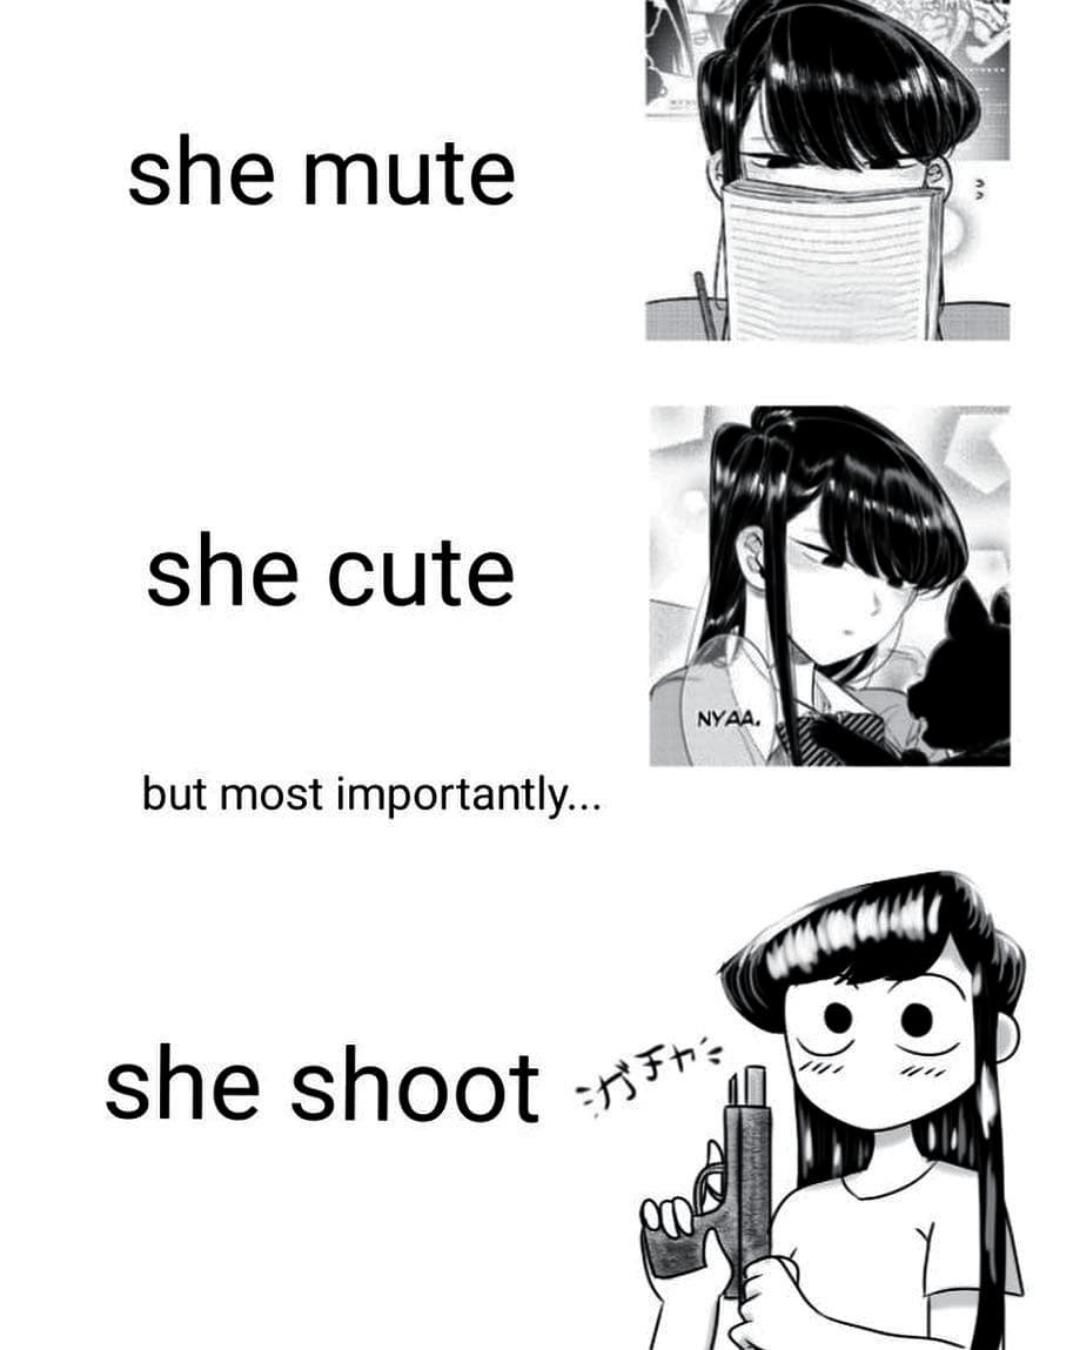 She can shoot *gun clicks*